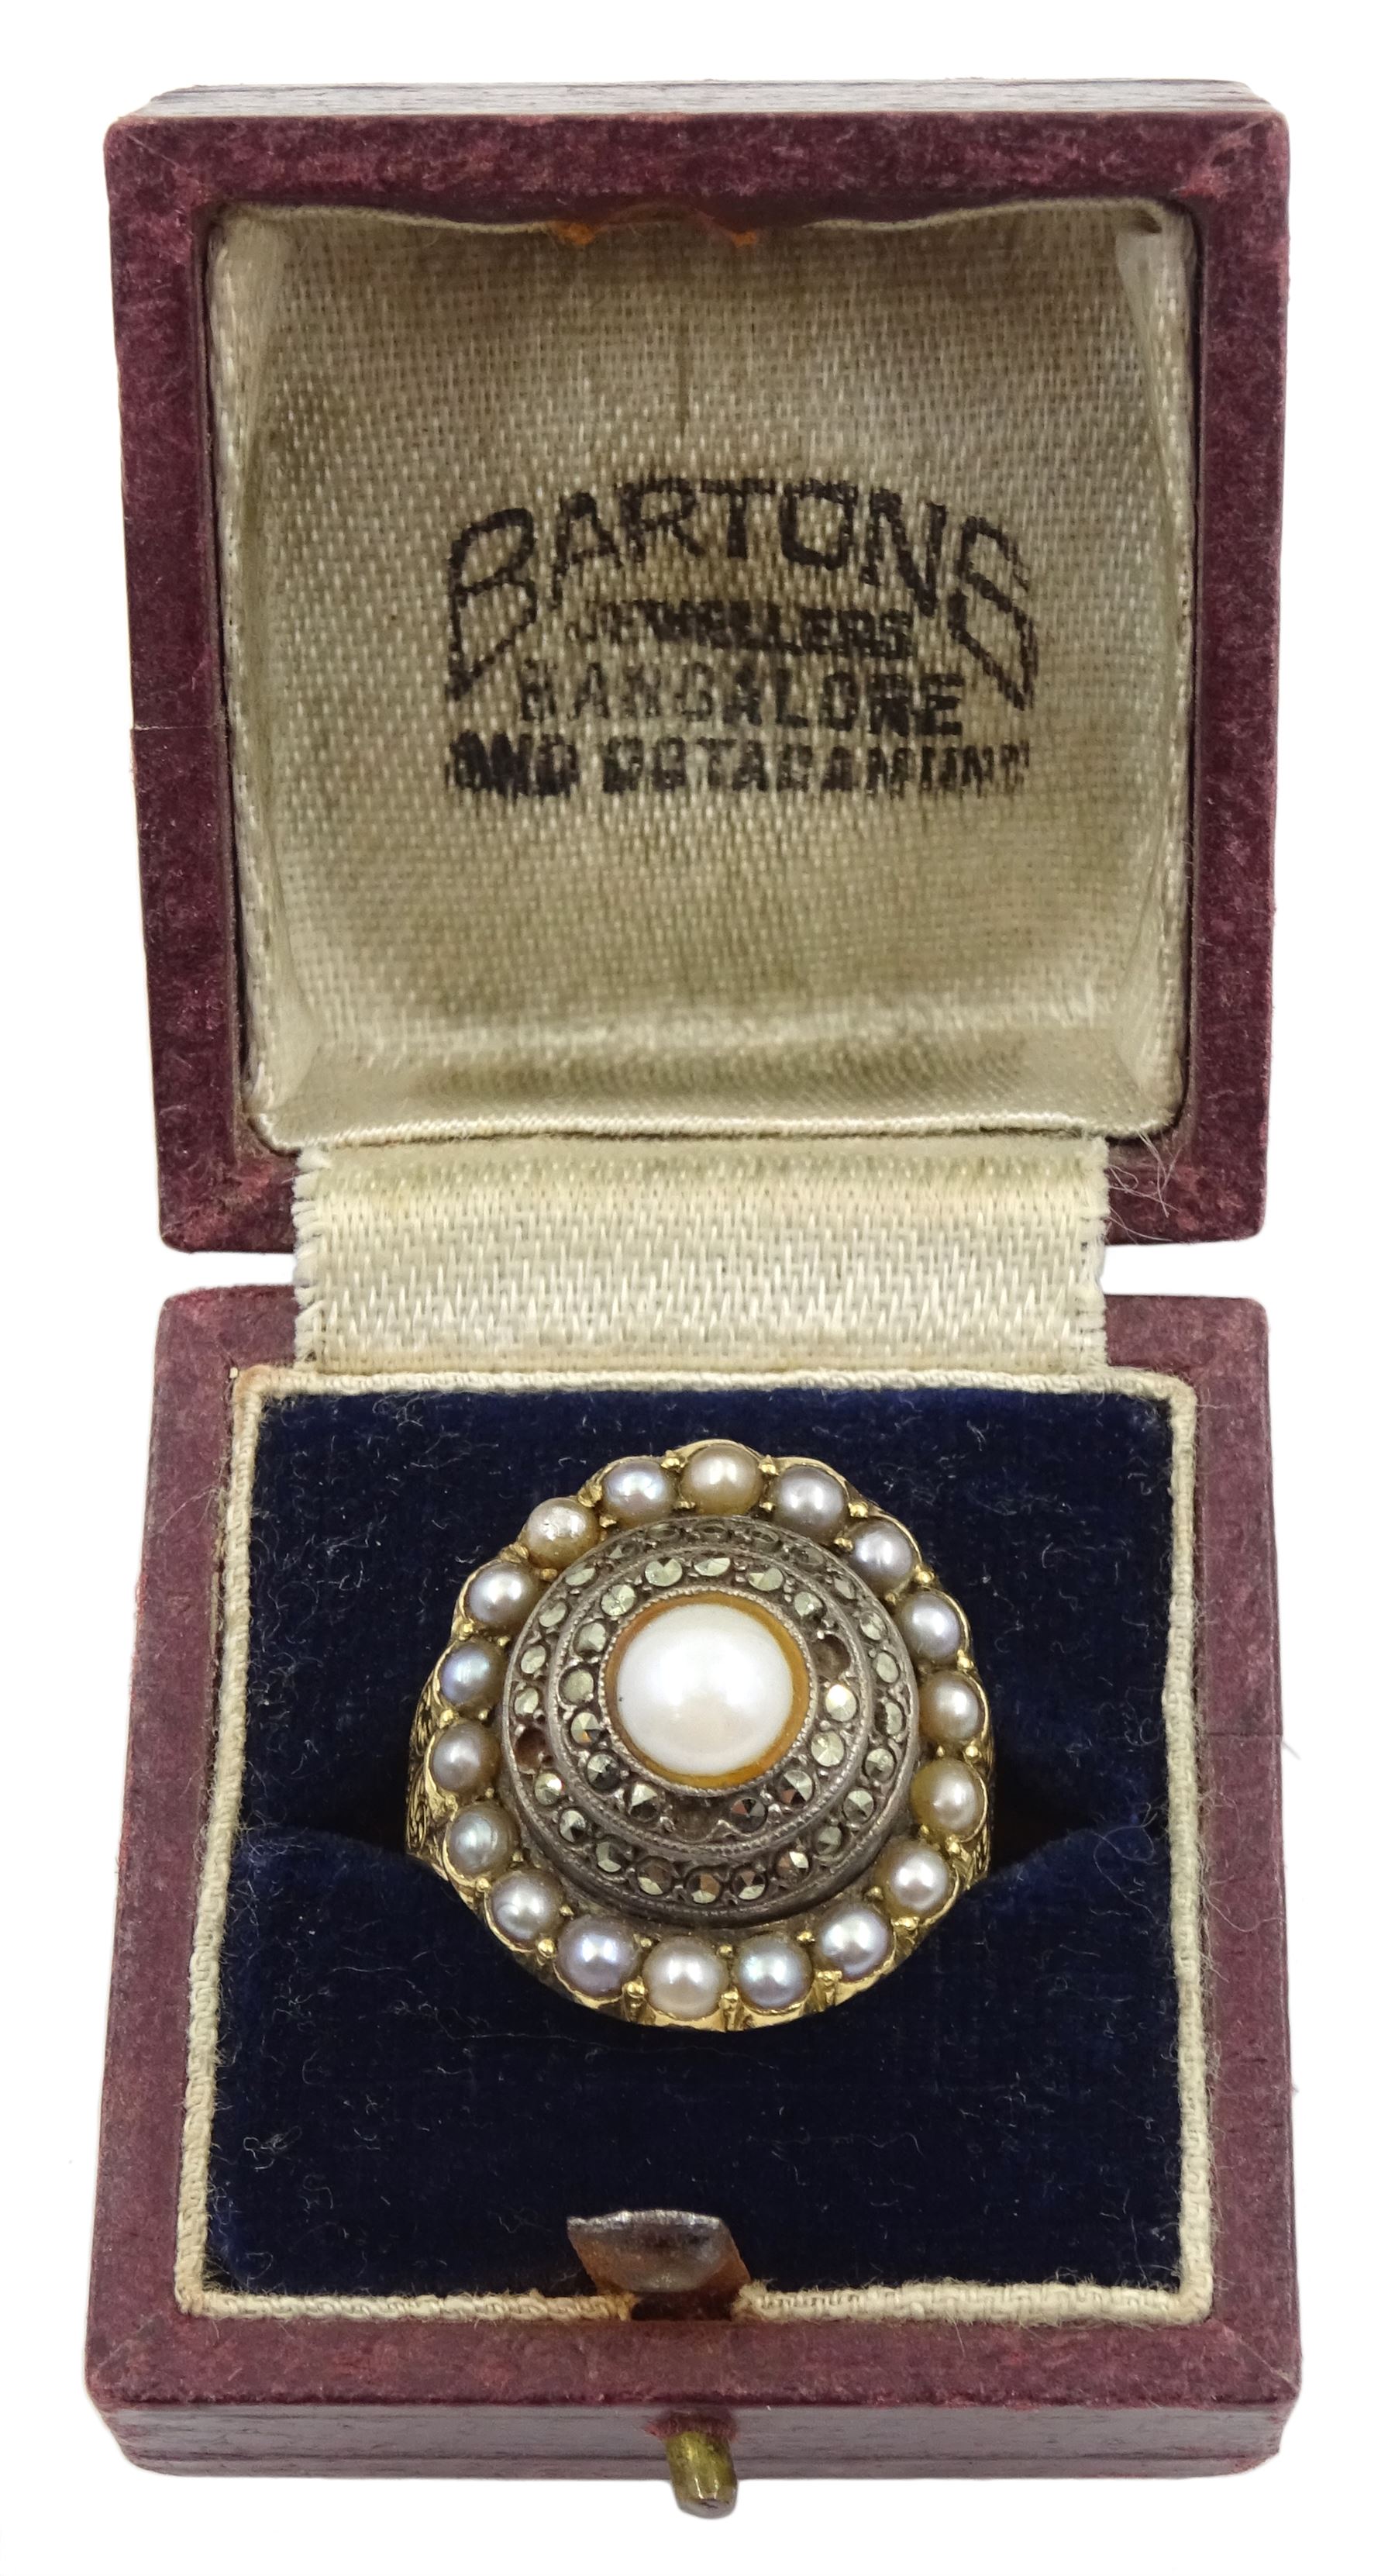 14ct gold split pearl circular mourning ring - Image 5 of 5